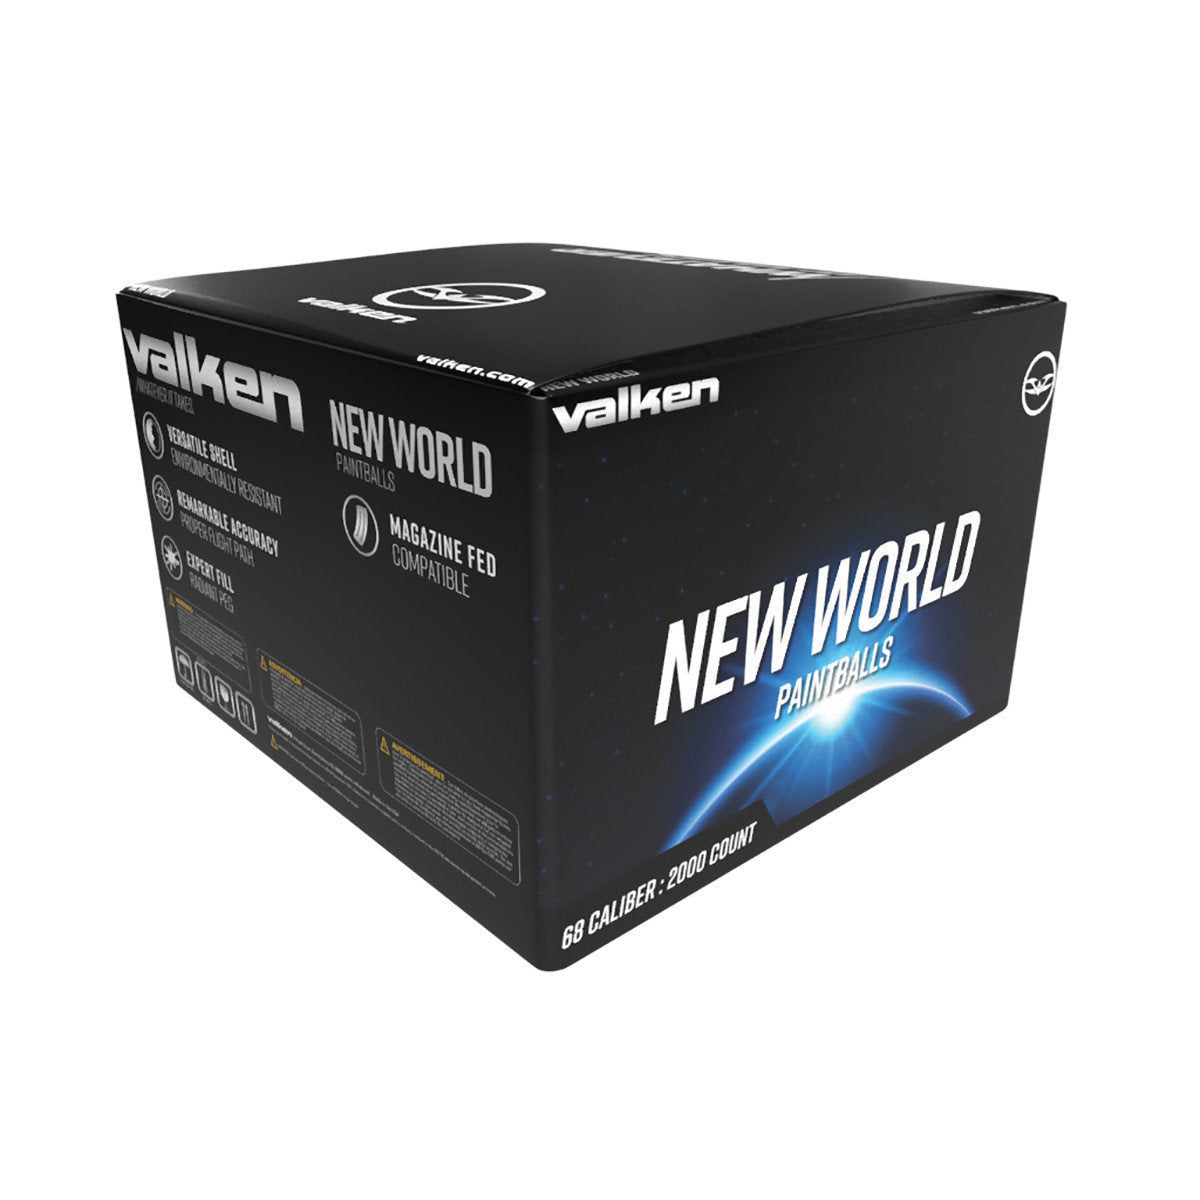 Valken New World Paintballs 2 Tone Yellow - 2000ct Box - NO SHIPPING